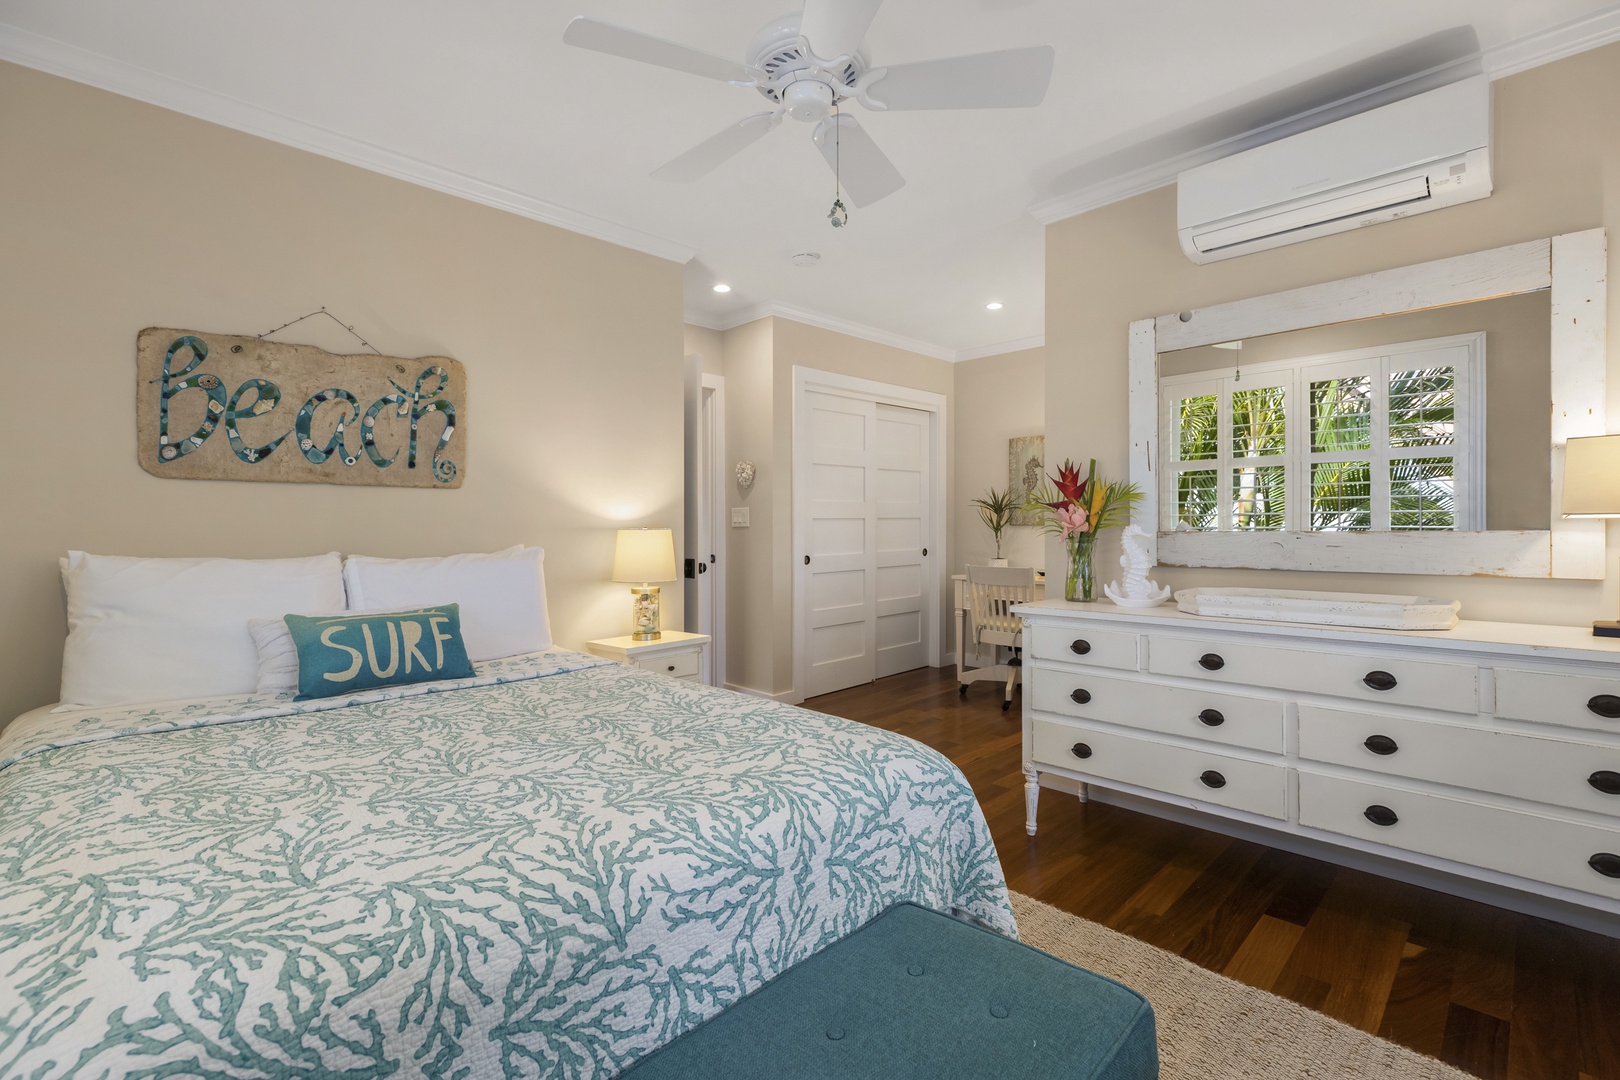 Honolulu Vacation Rentals, Hale Le'ahi - Guest bedroom 3 with queen bed